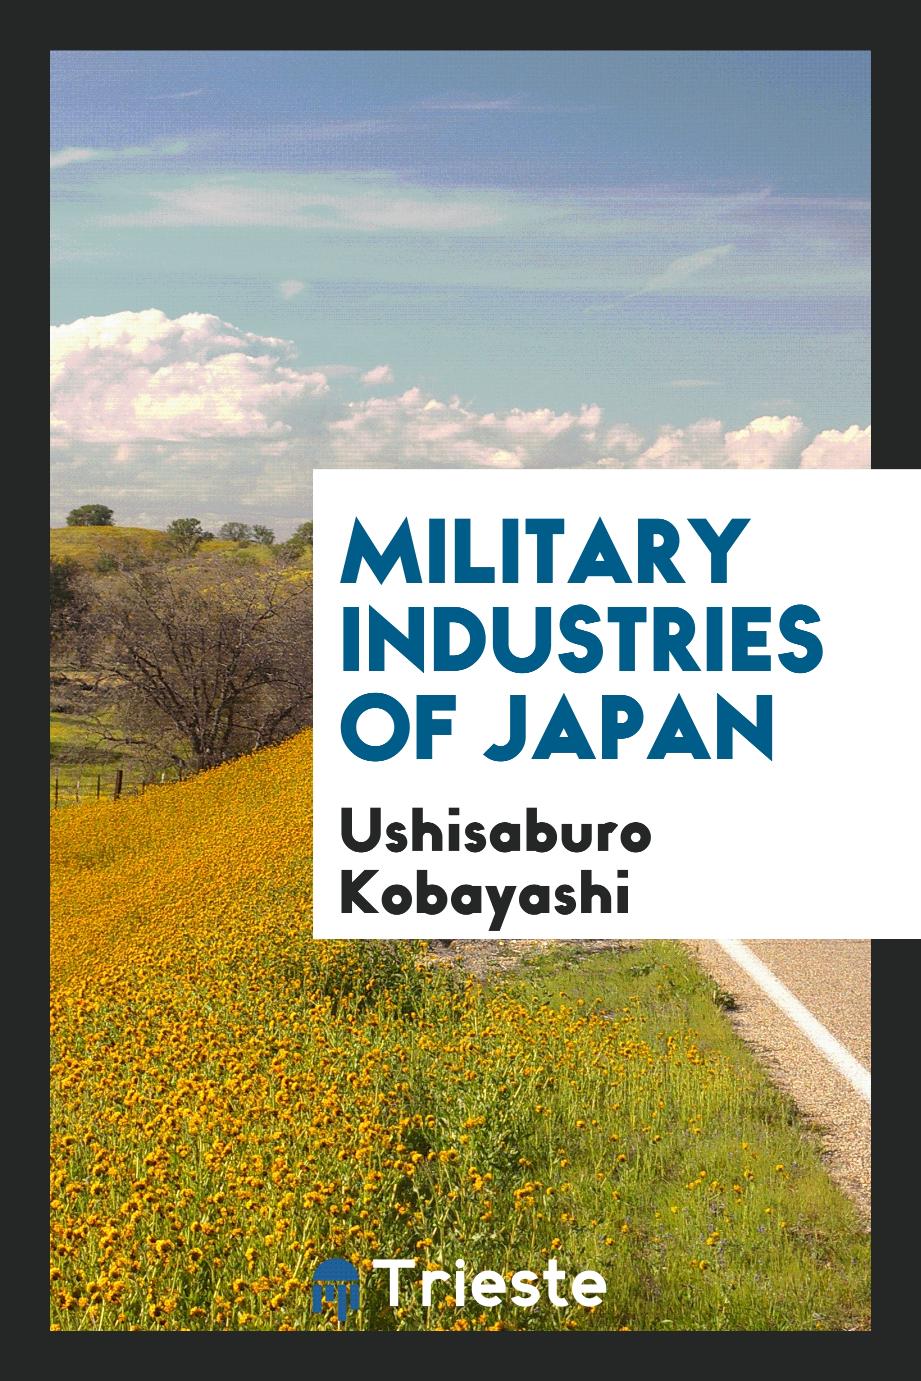 Military industries of Japan